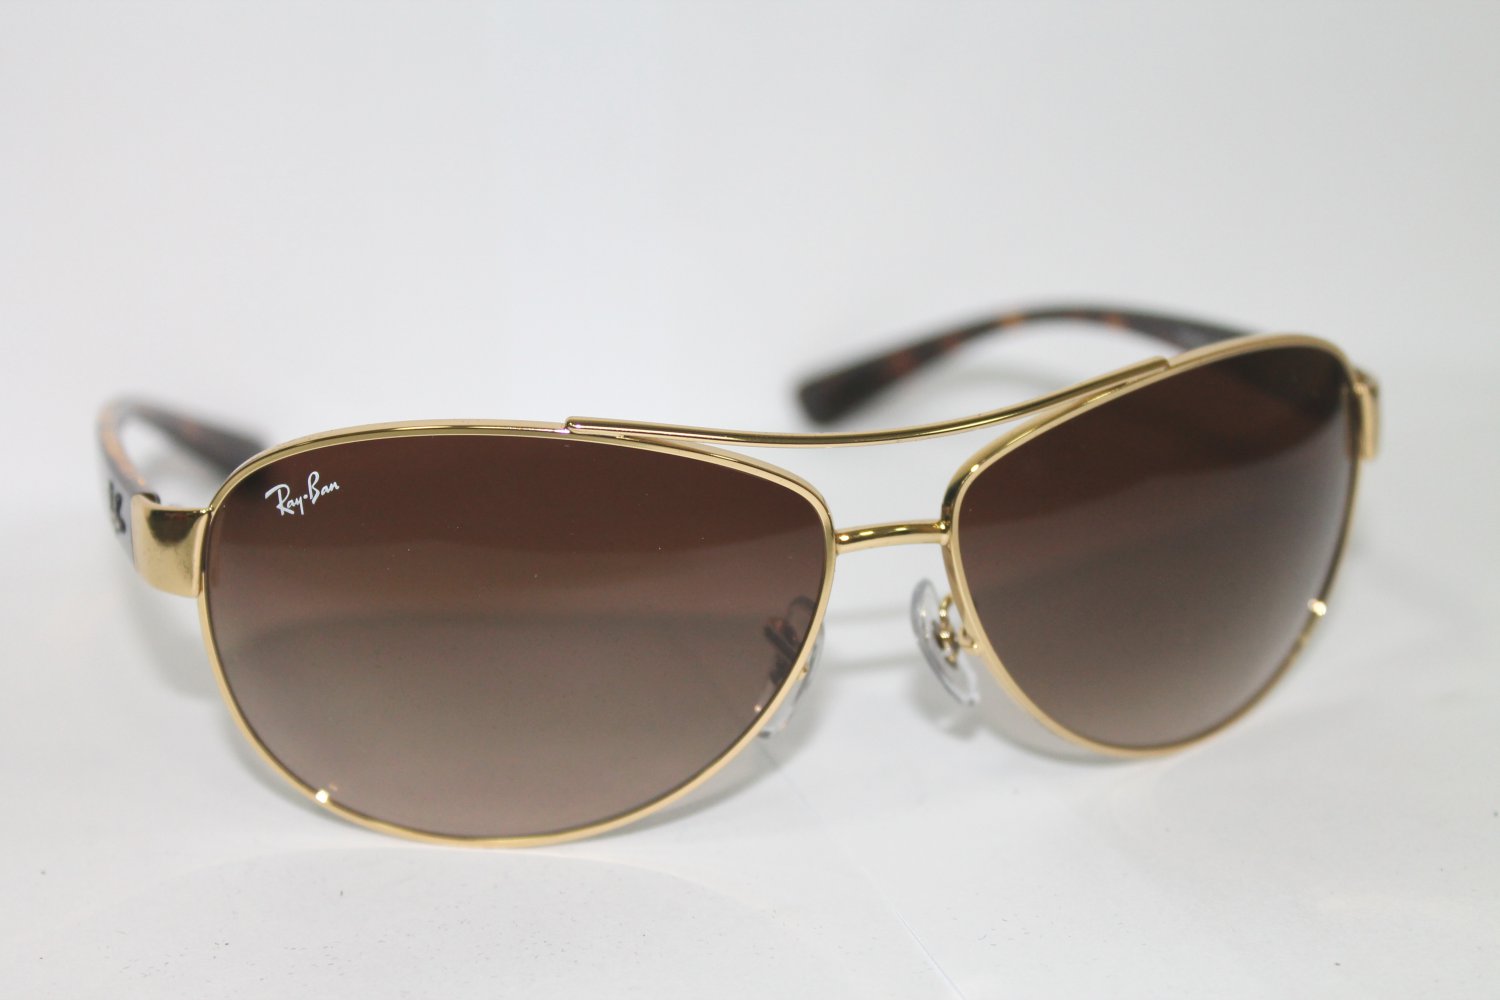 Ray Ban Sunglasses Aviator Rb3386 001 13 63 Gold Tortoise Brown Gradient Original